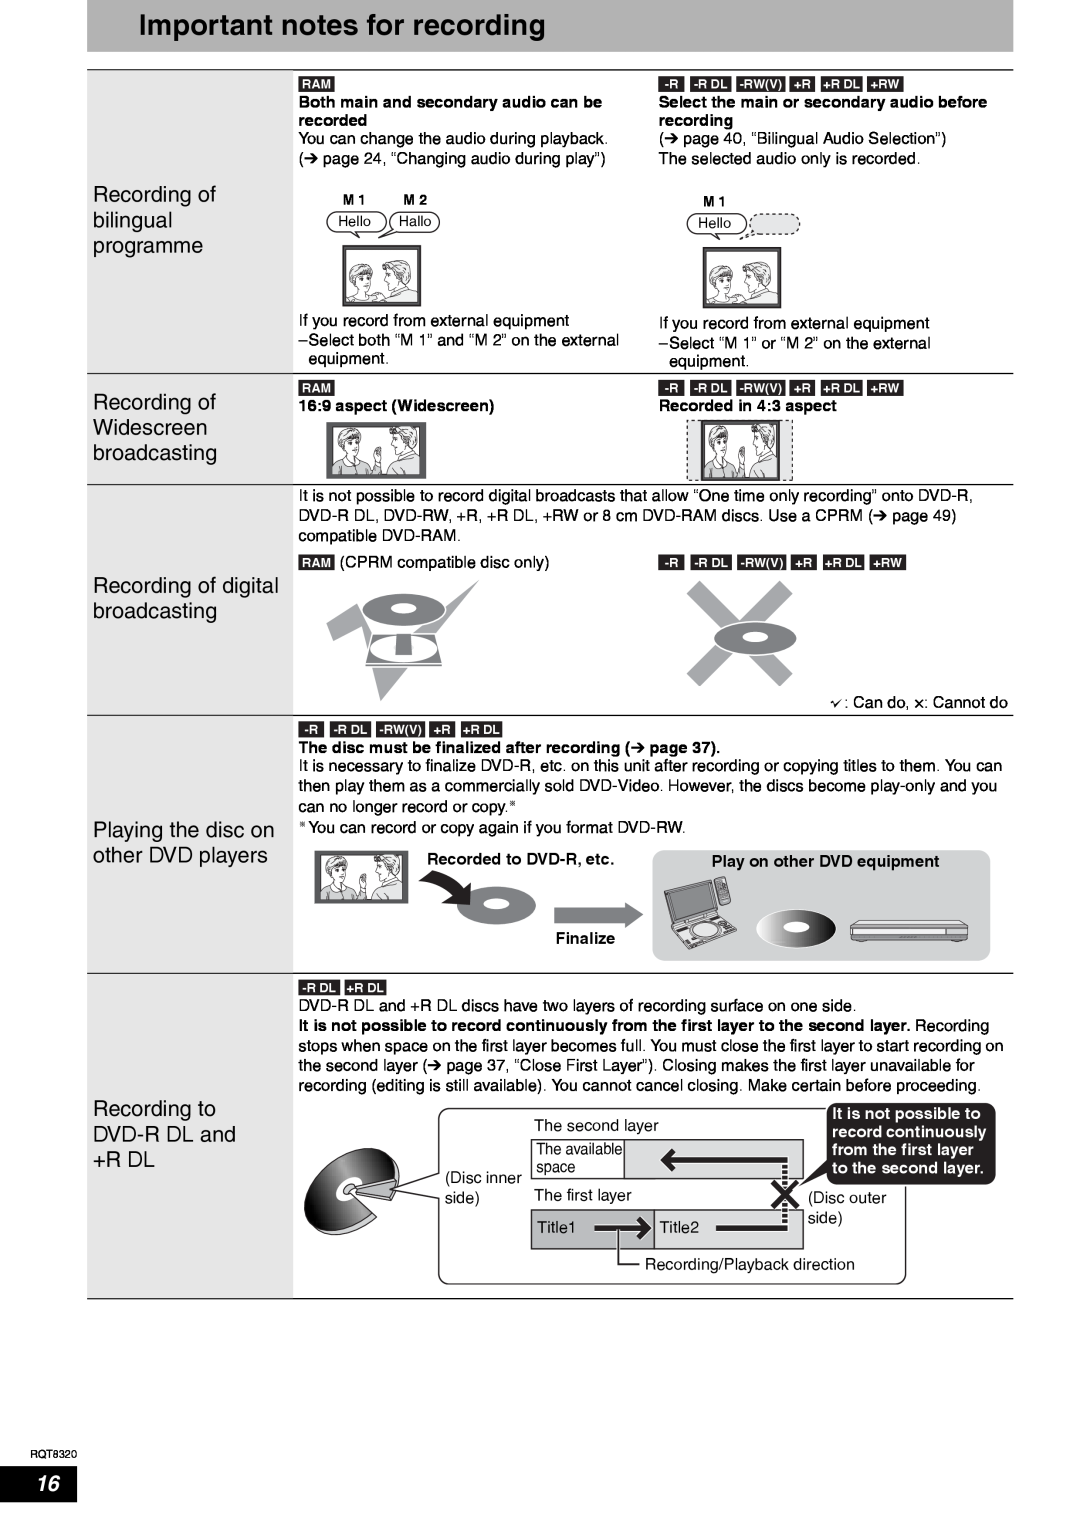 Panasonic DMR-ES15EB manual Important notes for recording, Recording of, bilingual, programme, Widescreen, broadcasting 